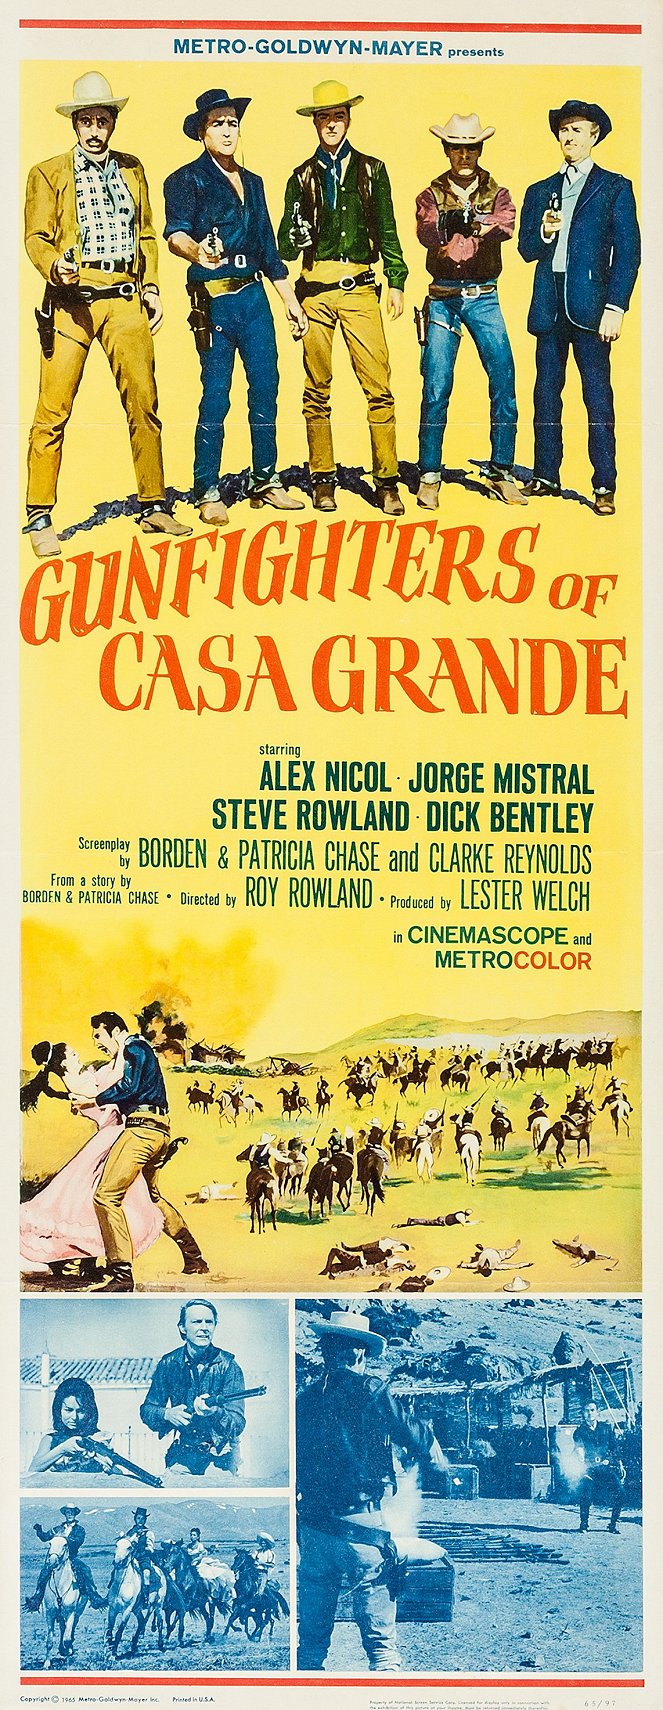 Gunfighters of Casa Grande - Posters